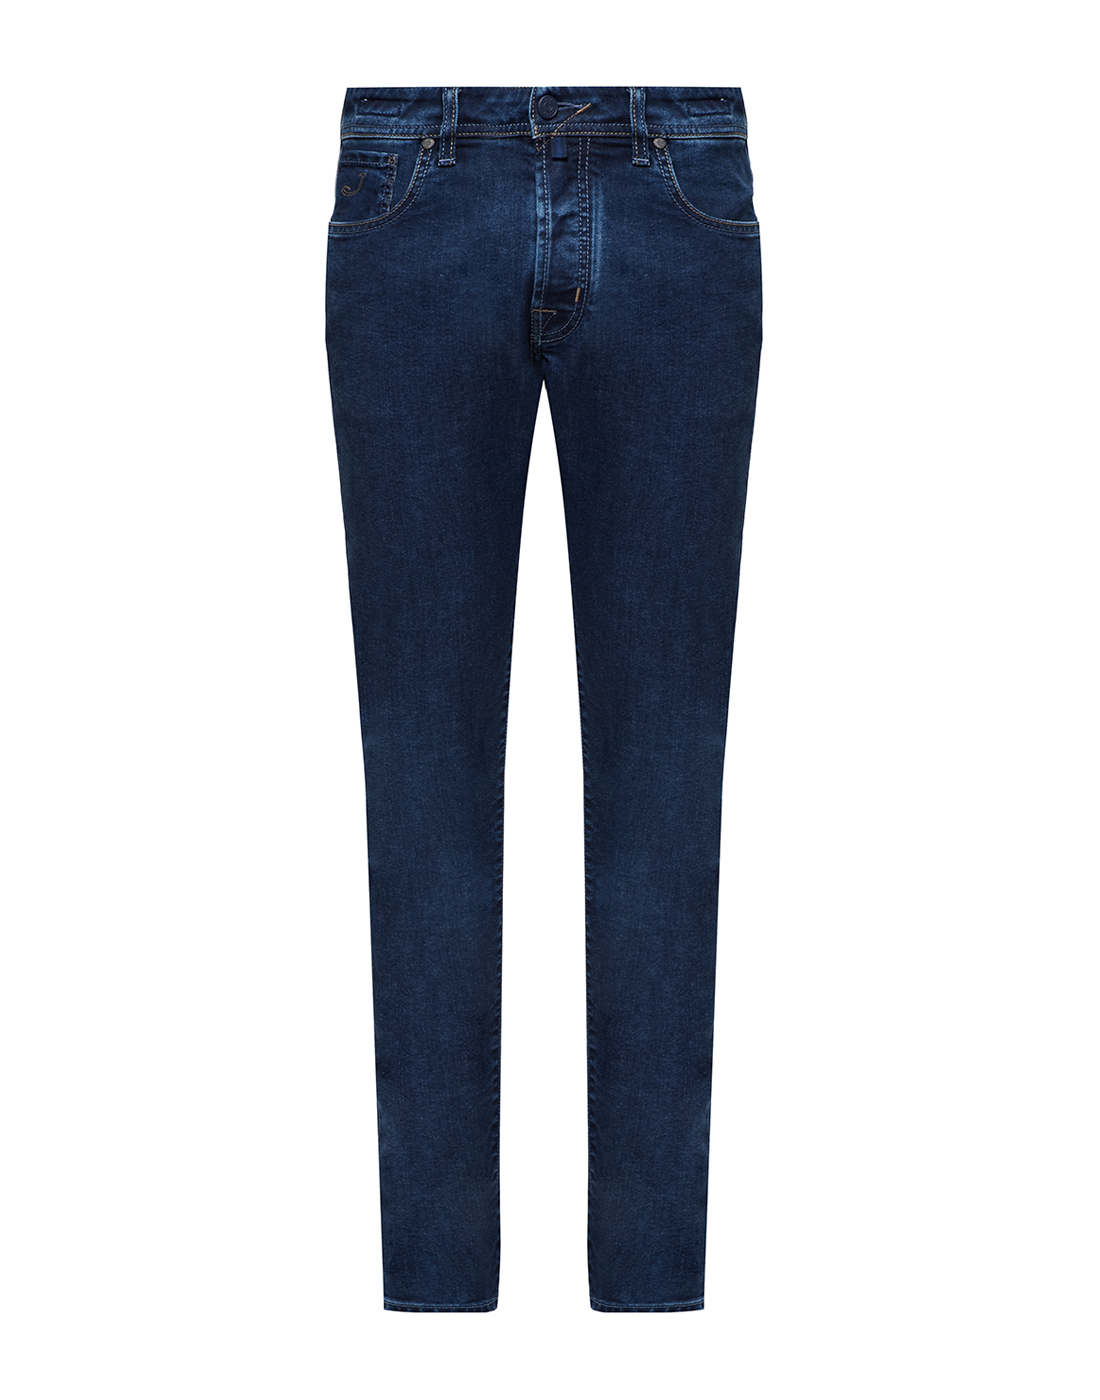 Мужские синие джинсы Jacob Cohen SS3603 049D-1